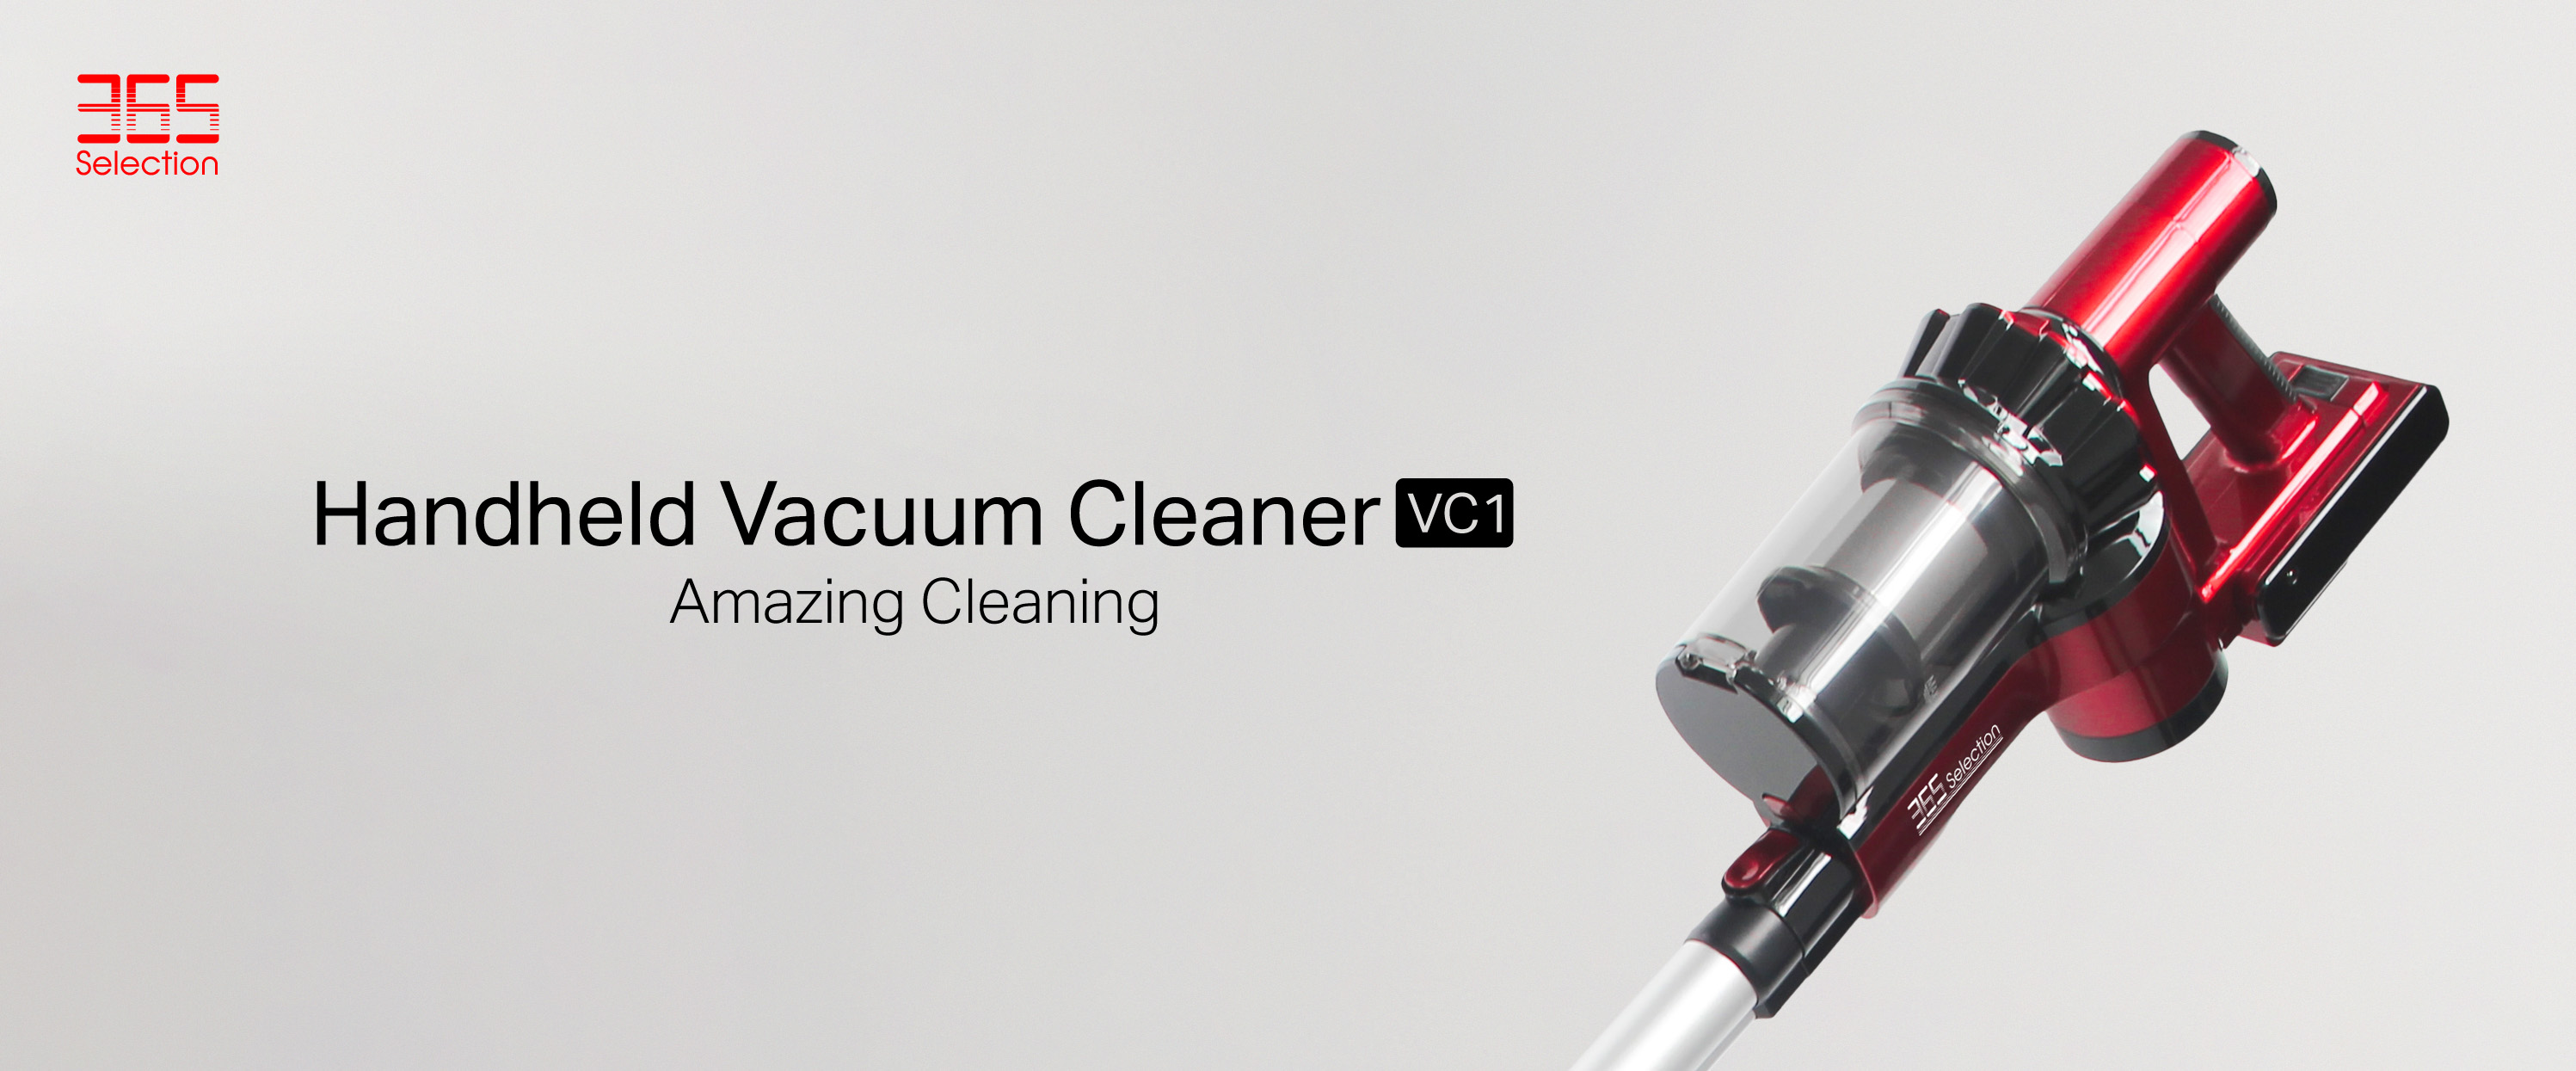 365 Selection Handheld Vacuum Cleaner VC1